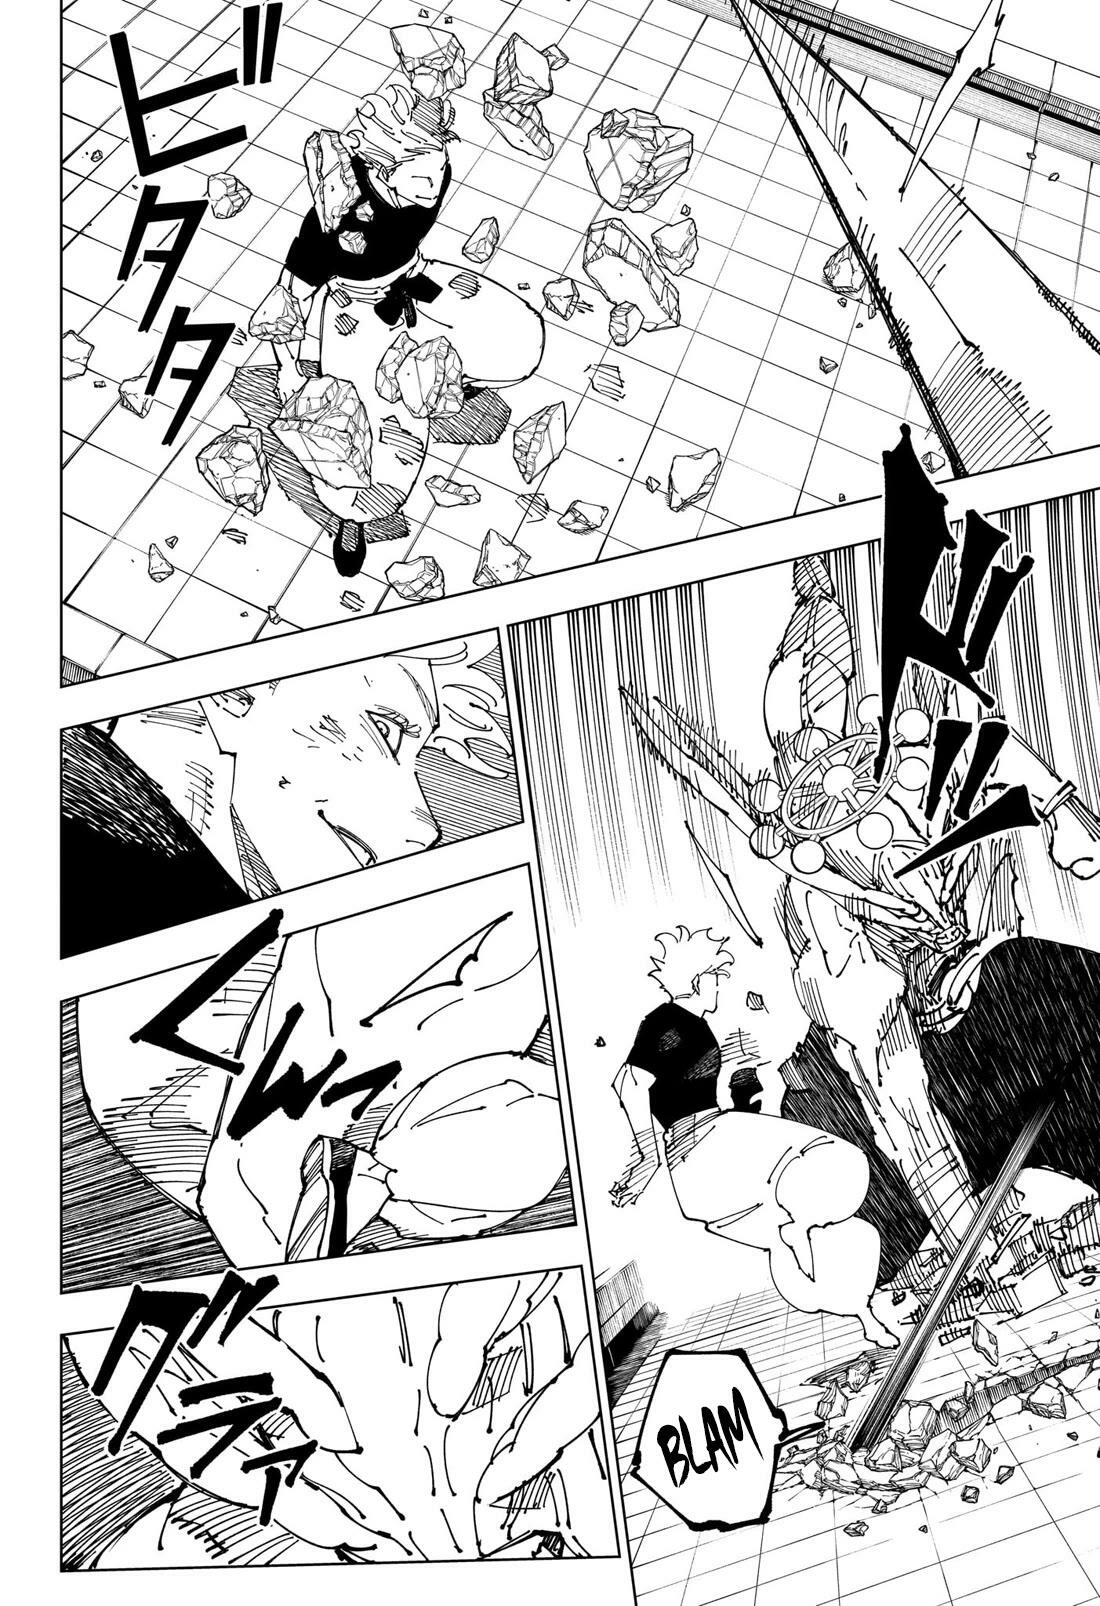 Jujutsu Kaisen Chapter 234: The Decisive Battle In The Uninhabited, Demon-Infested Shinjuku ⑫ page 9 - Mangakakalot